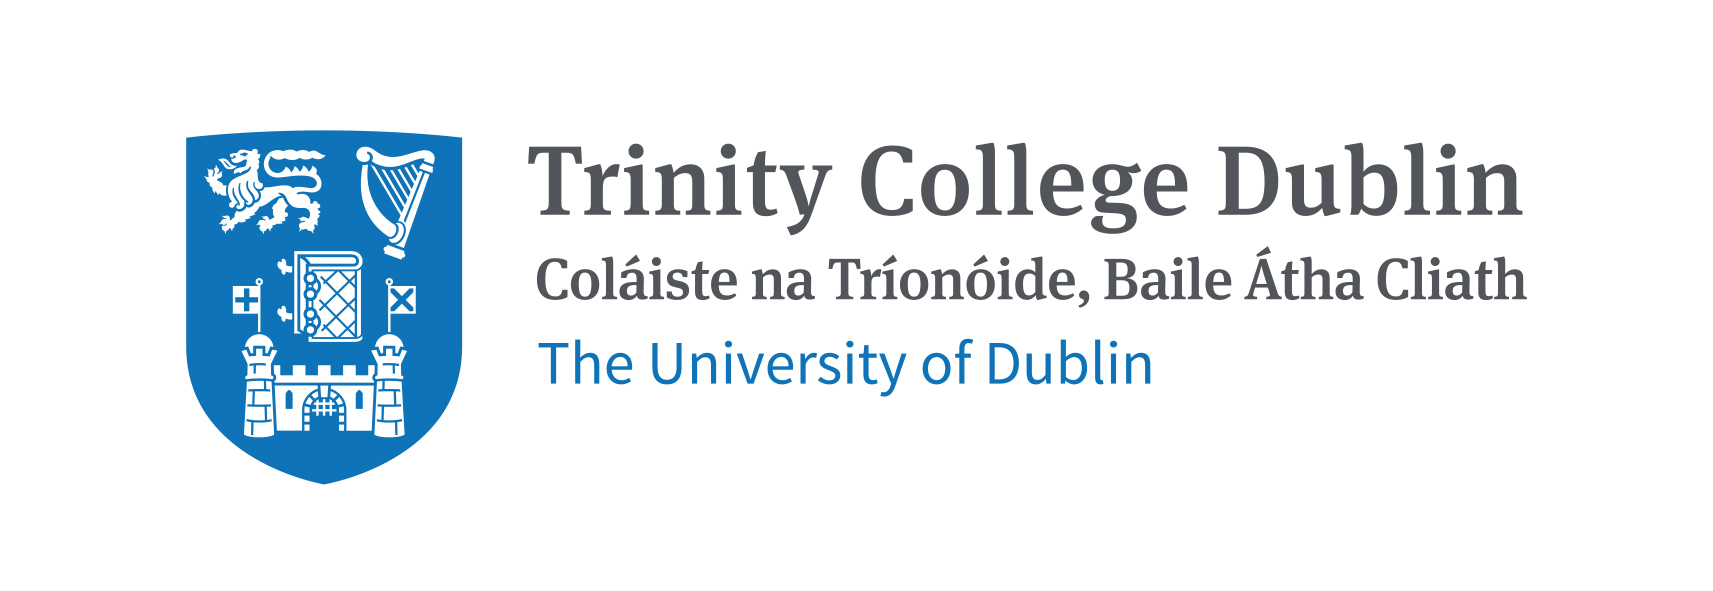 Trinity College Dublin, the University of Dublin, Ireland